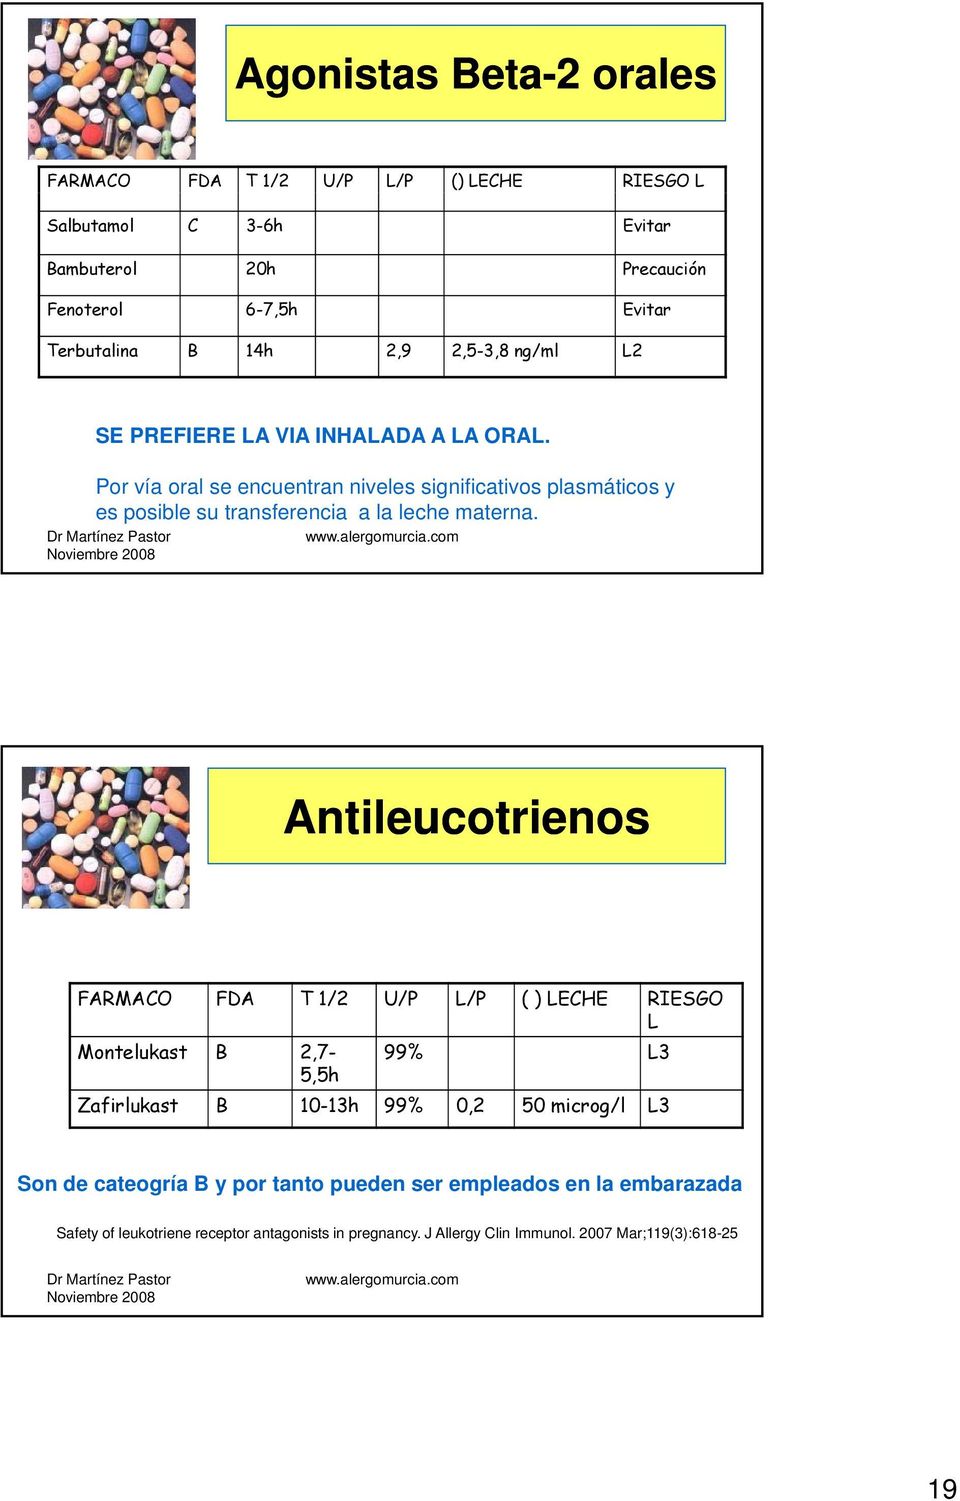 Antileucotrienos FARMACO FDA T 1/2 U/P L/P ( ) LECHE RIESGO L Montelukast B 2,7-99% L3 5,5h Zafirlukast B 10-13h 99% 0,2 50 microg/l L3 Son de